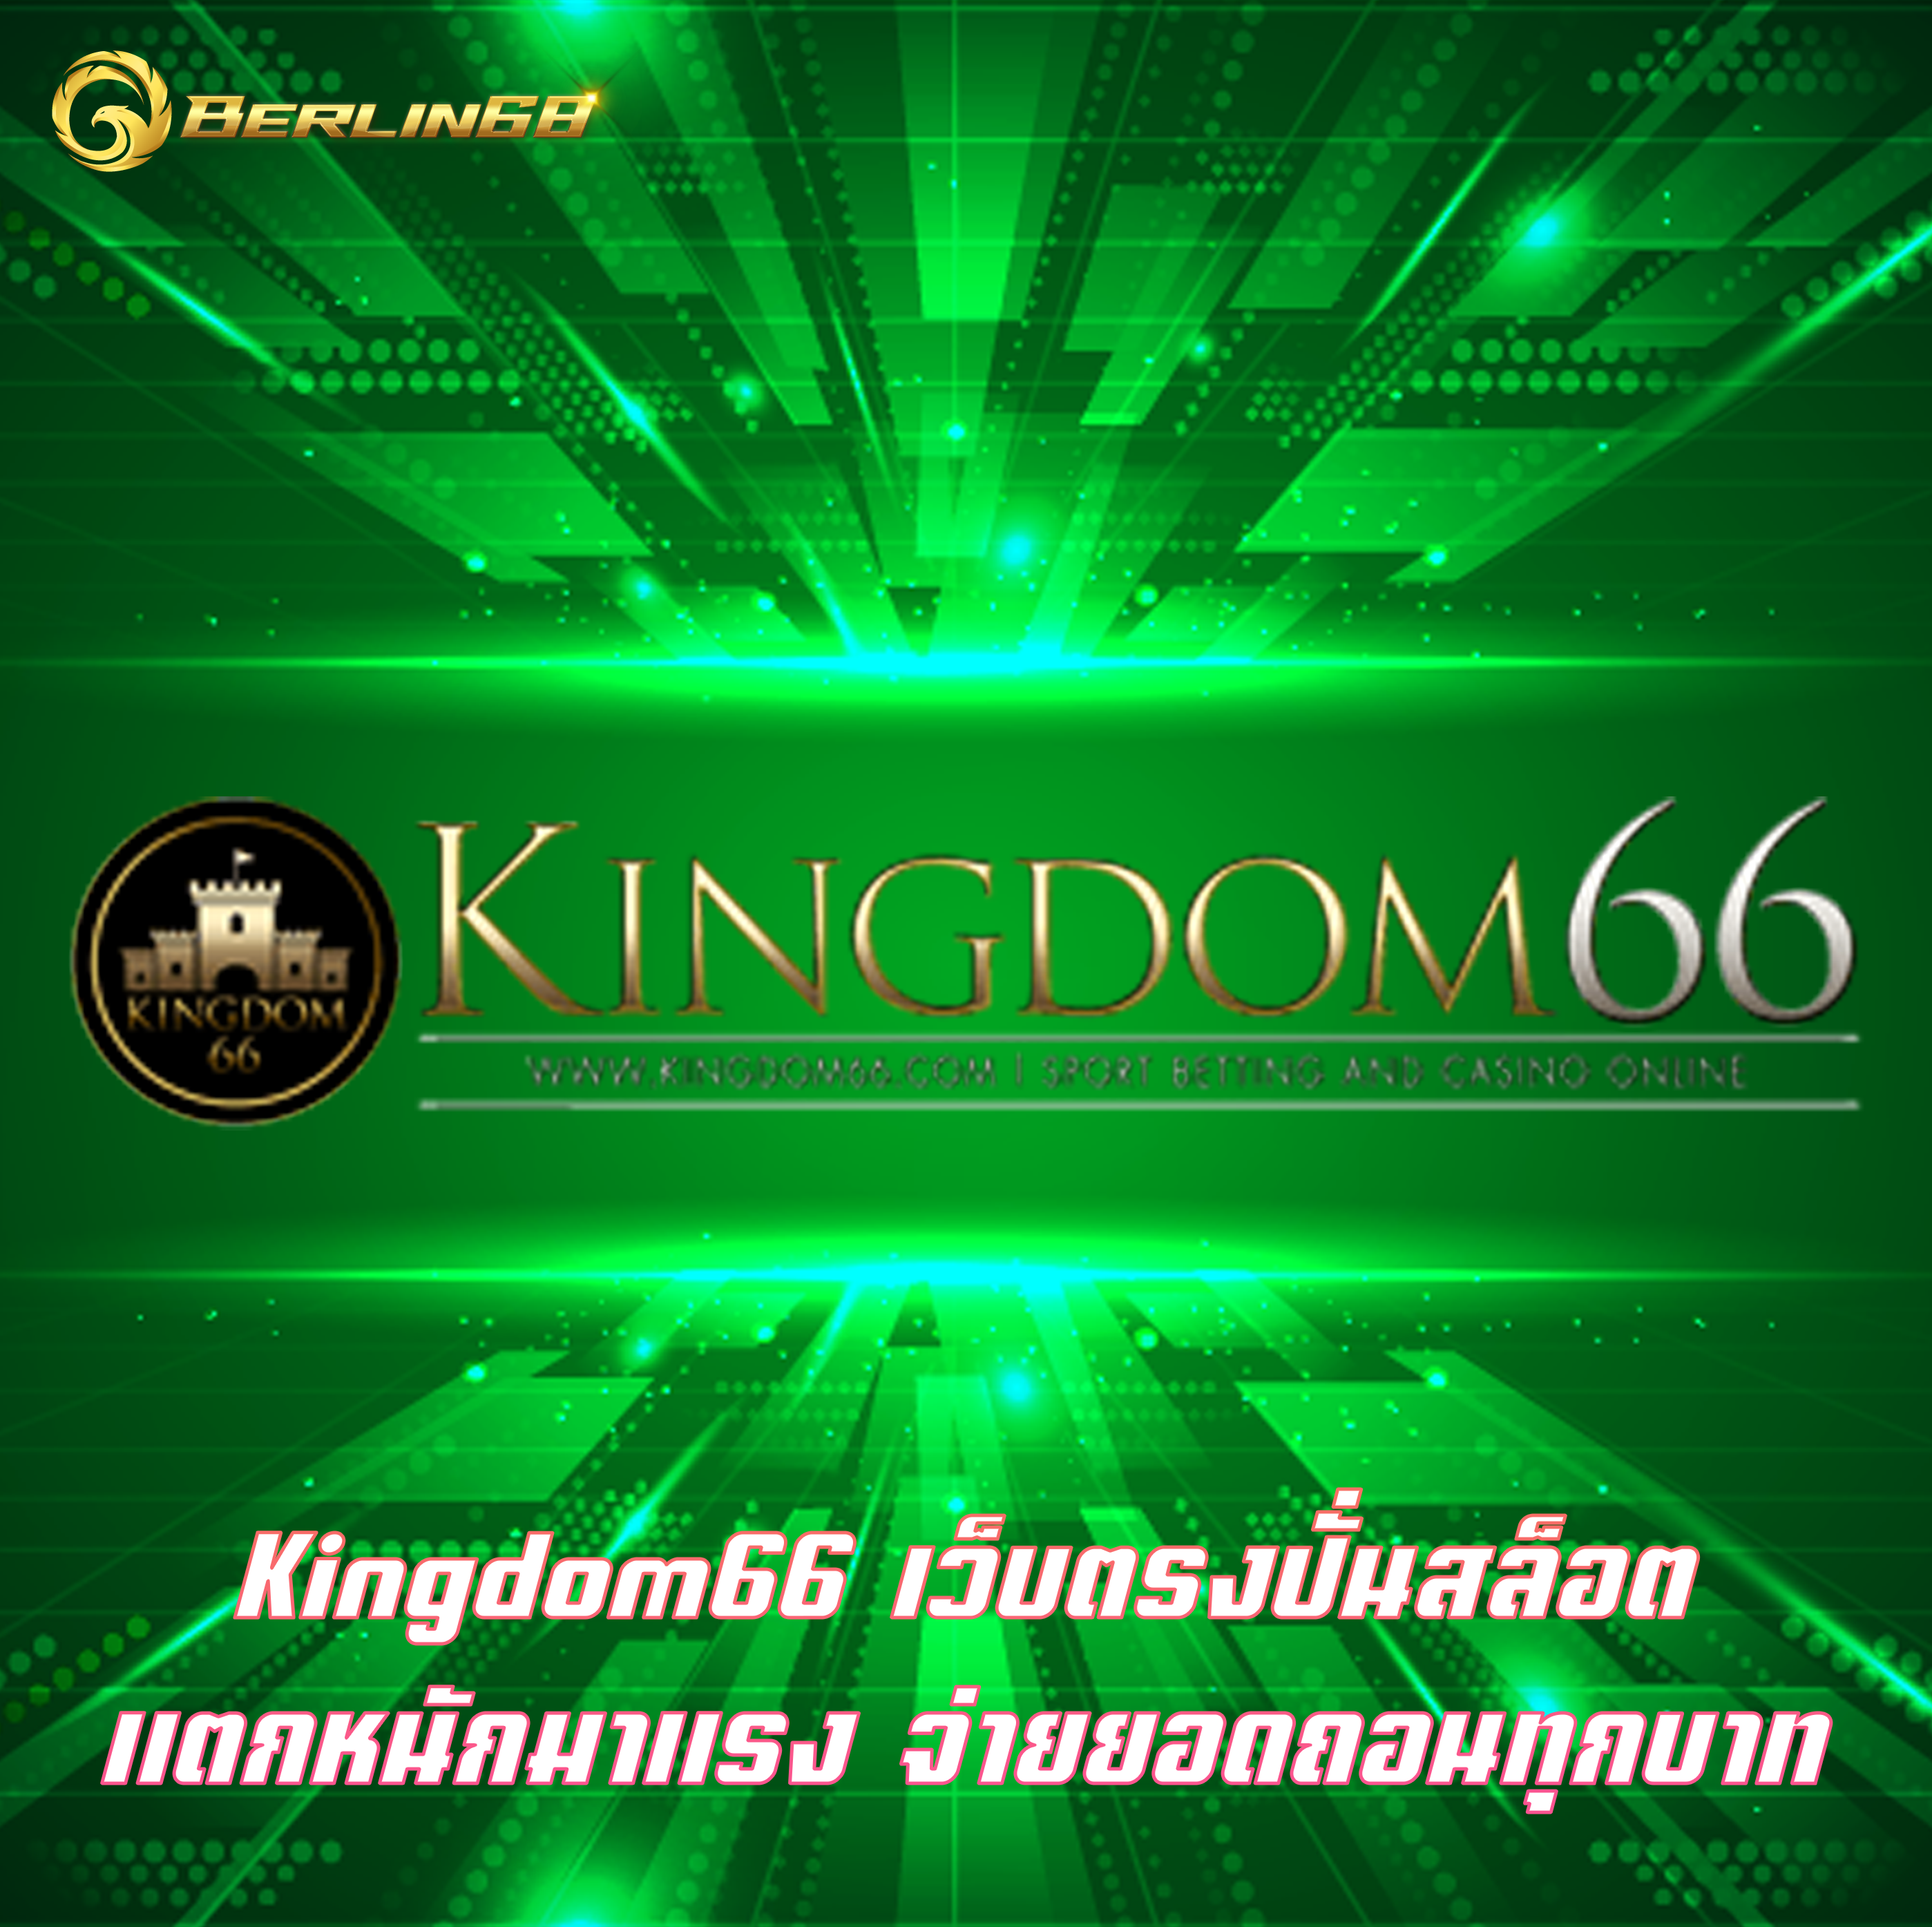 Kingdom66